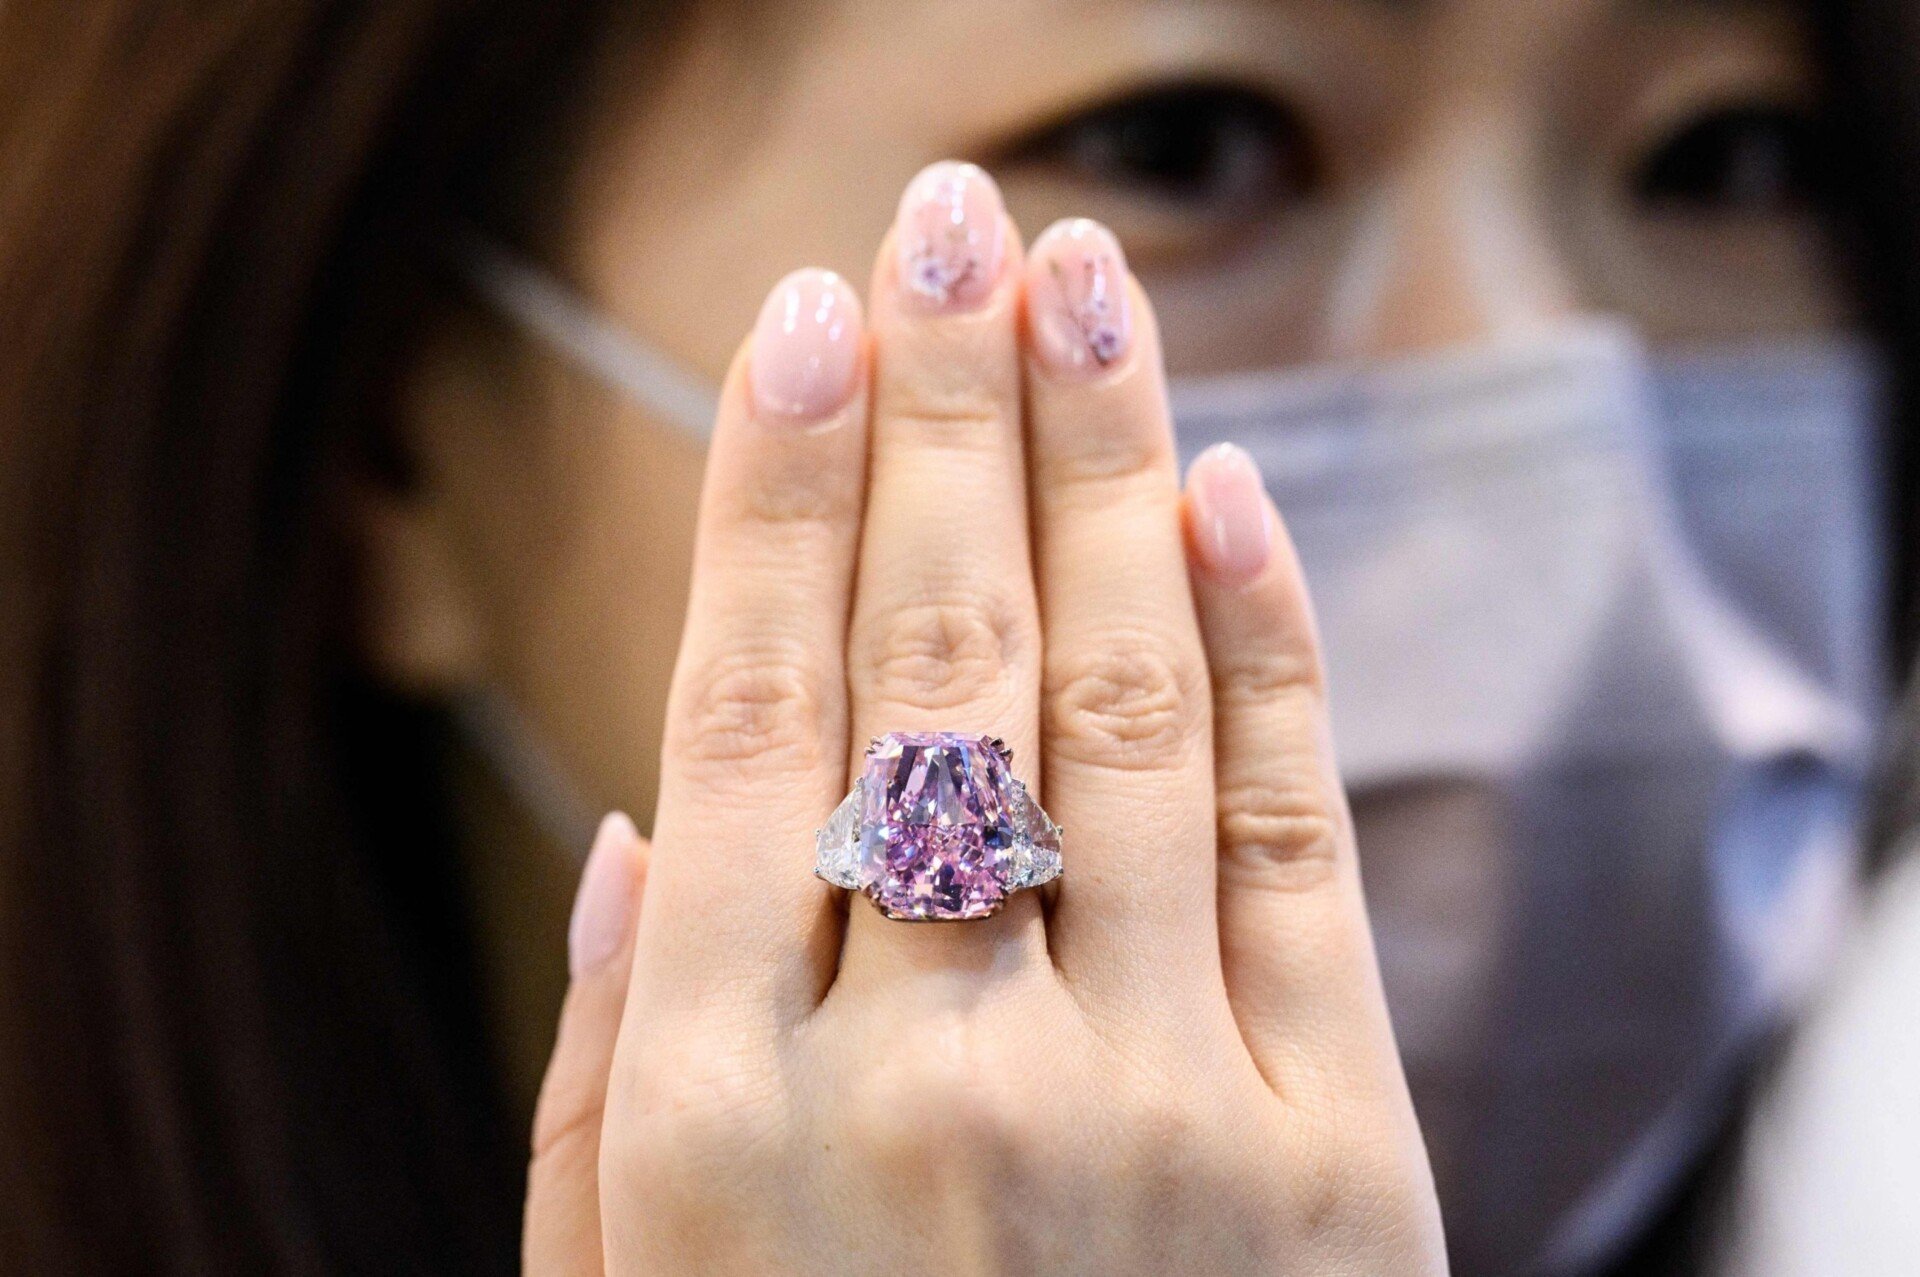 The Sakura Diamond – 15.81-carat fancy vivid purple-pink diamond.